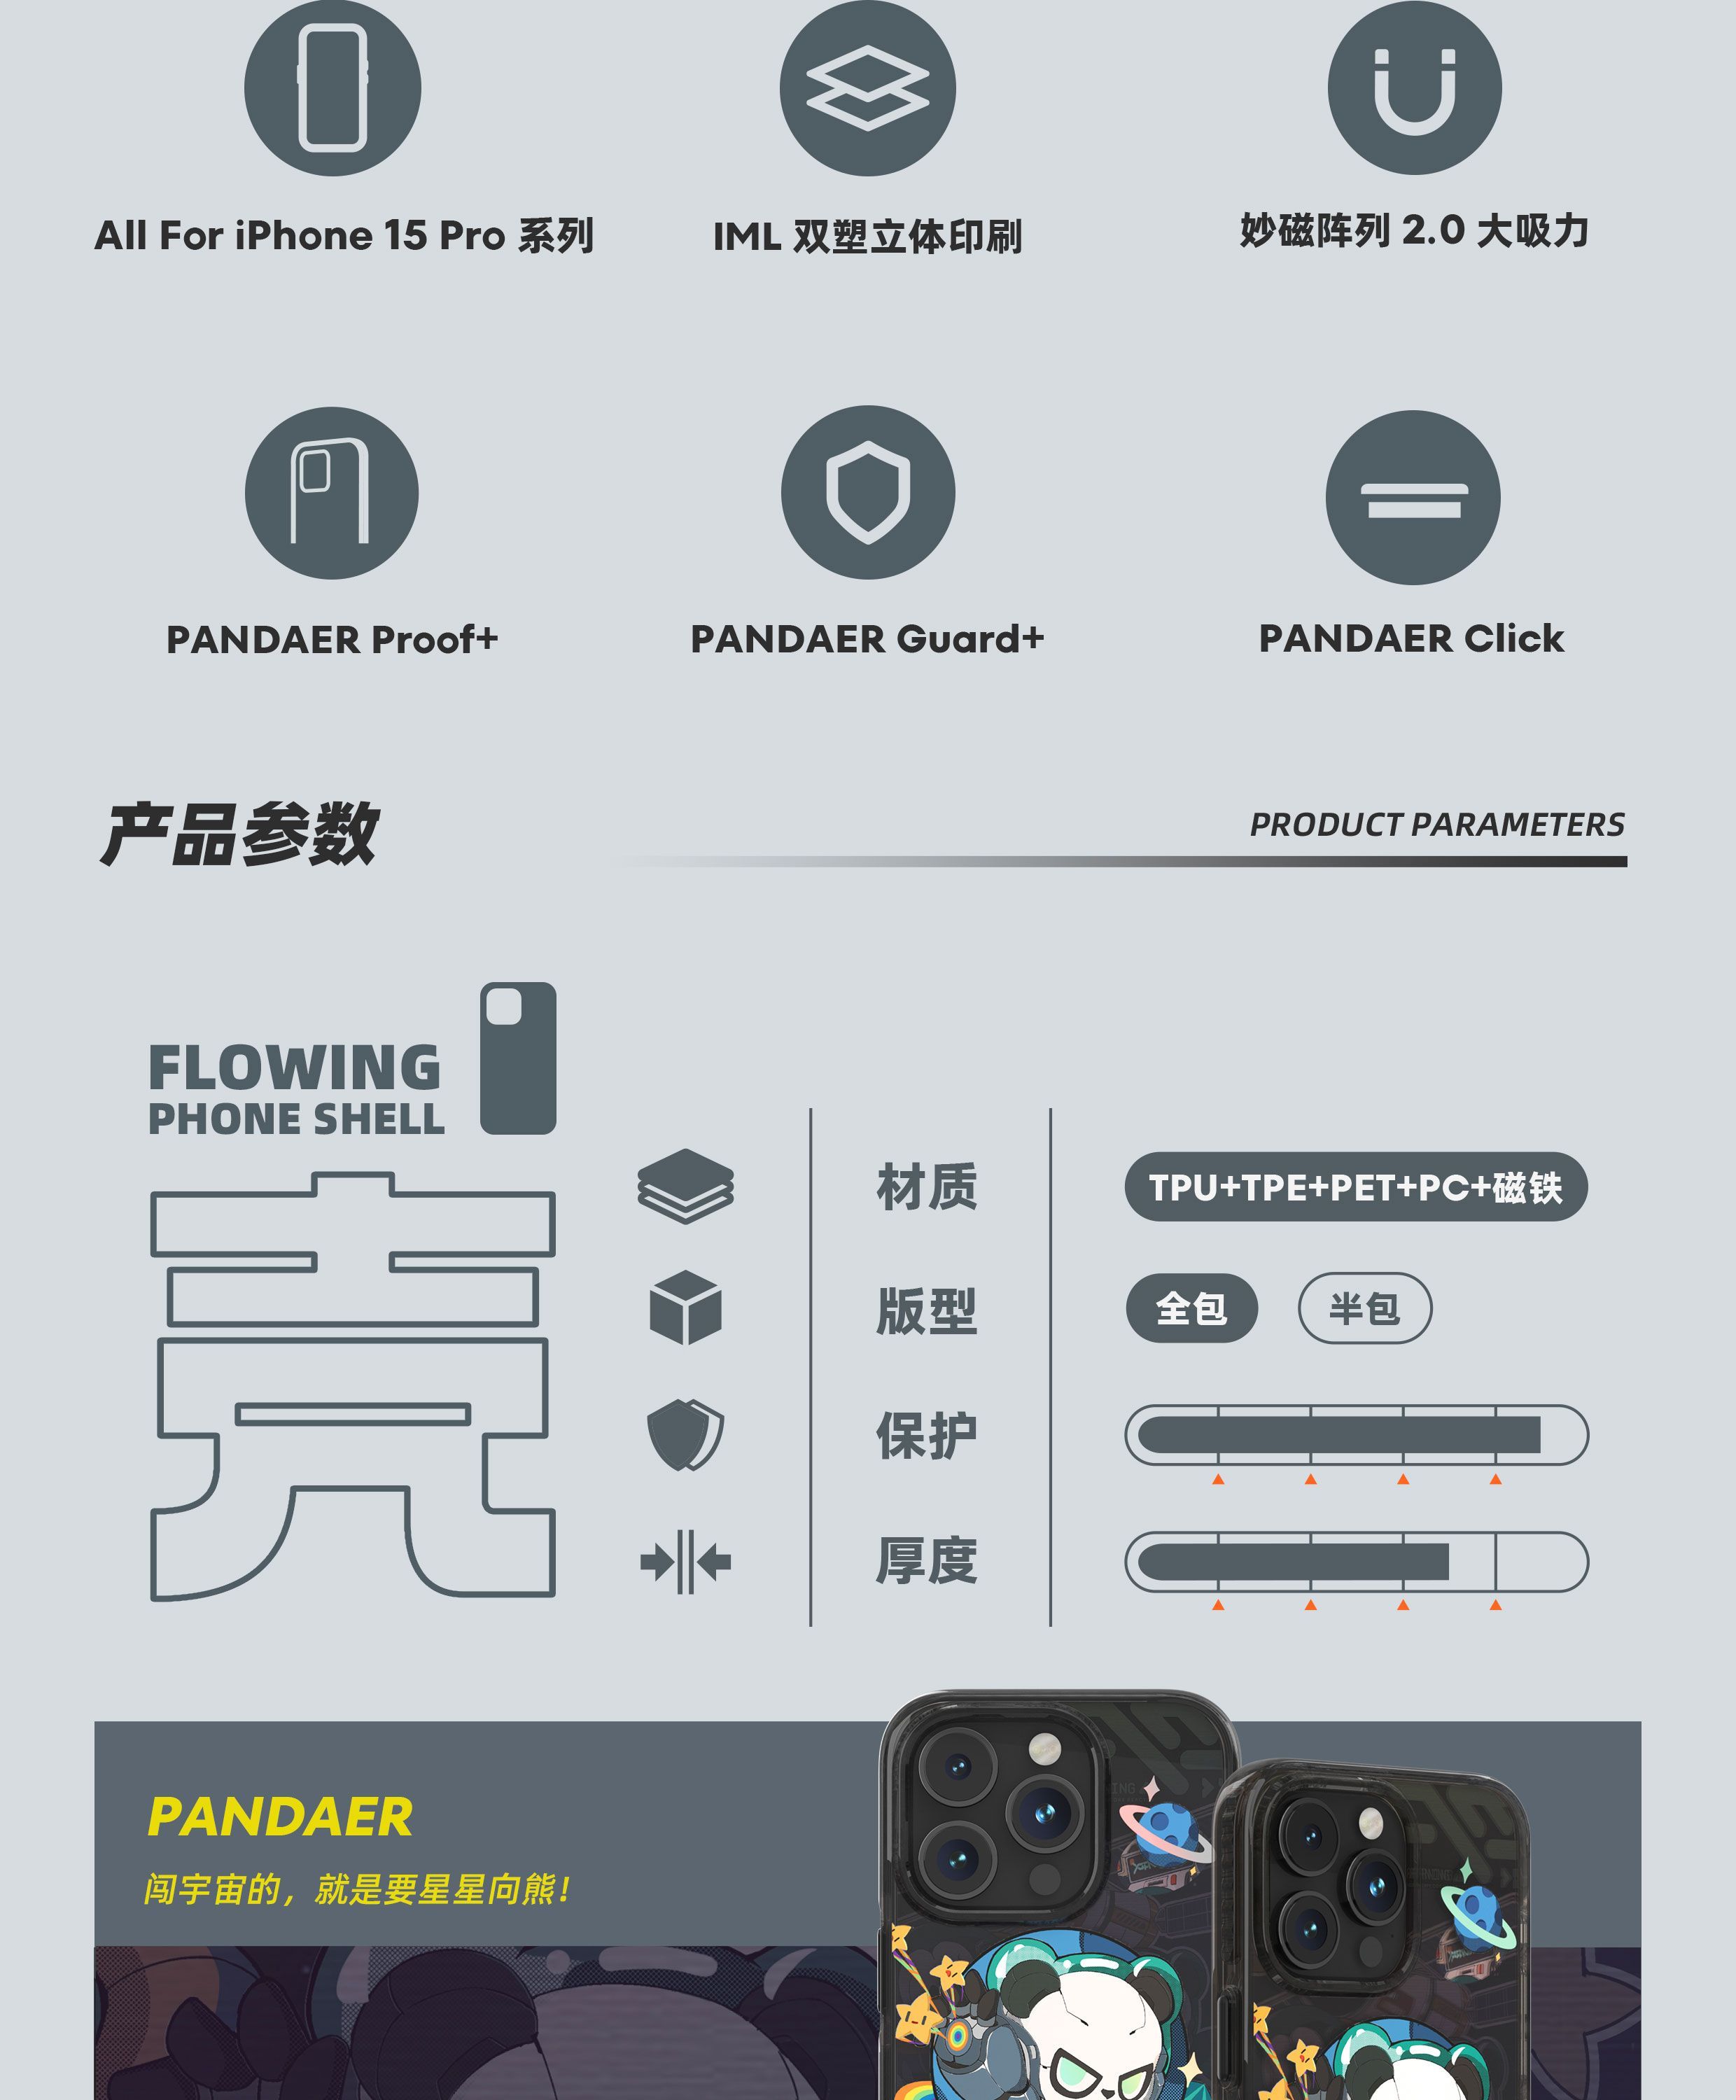 Meizu PANDAER PASA Case for iPhone 15 Pro Max